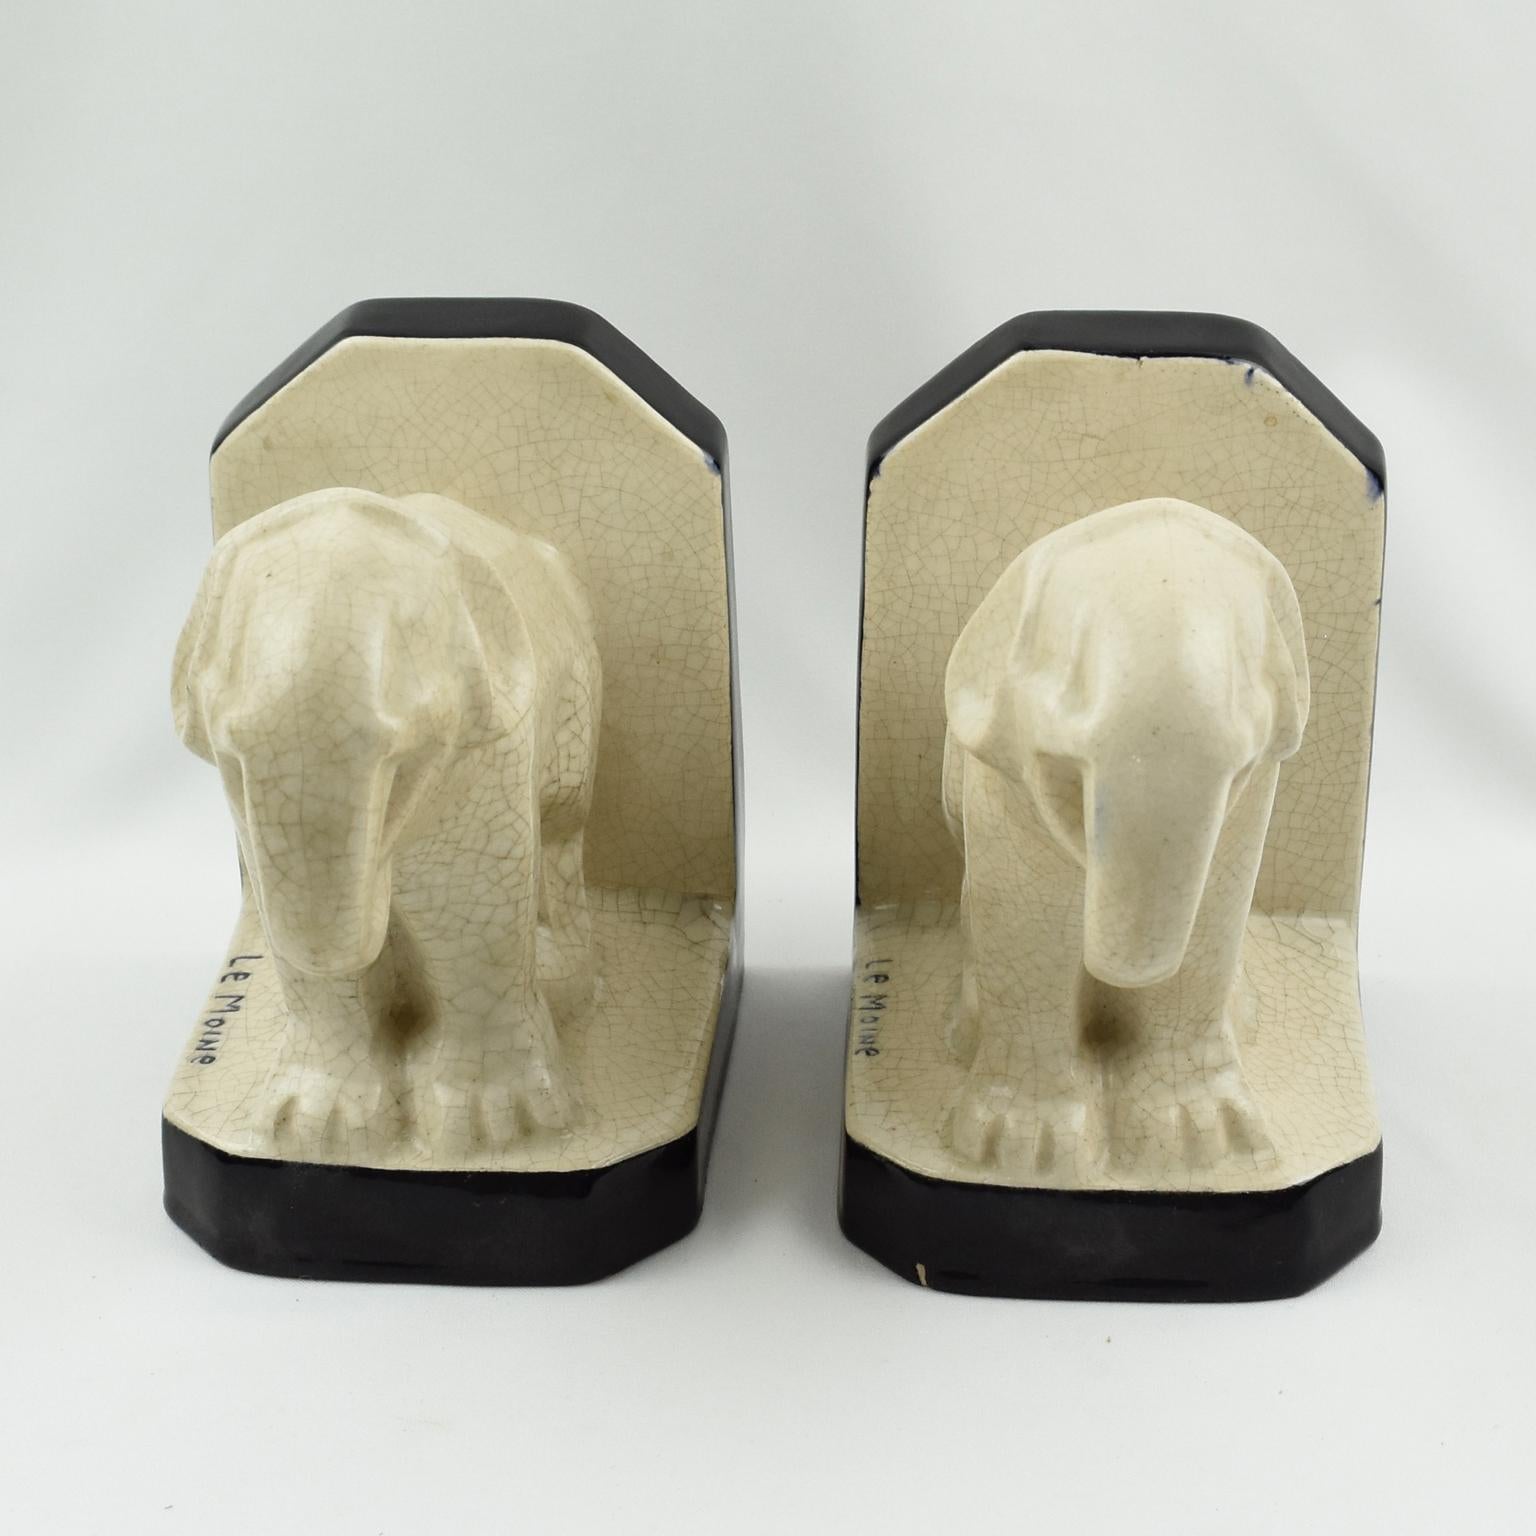 Art Deco Crackle Ceramic Elephant Sculpture Bookends by Le Moine, France 1930s For Sale 3